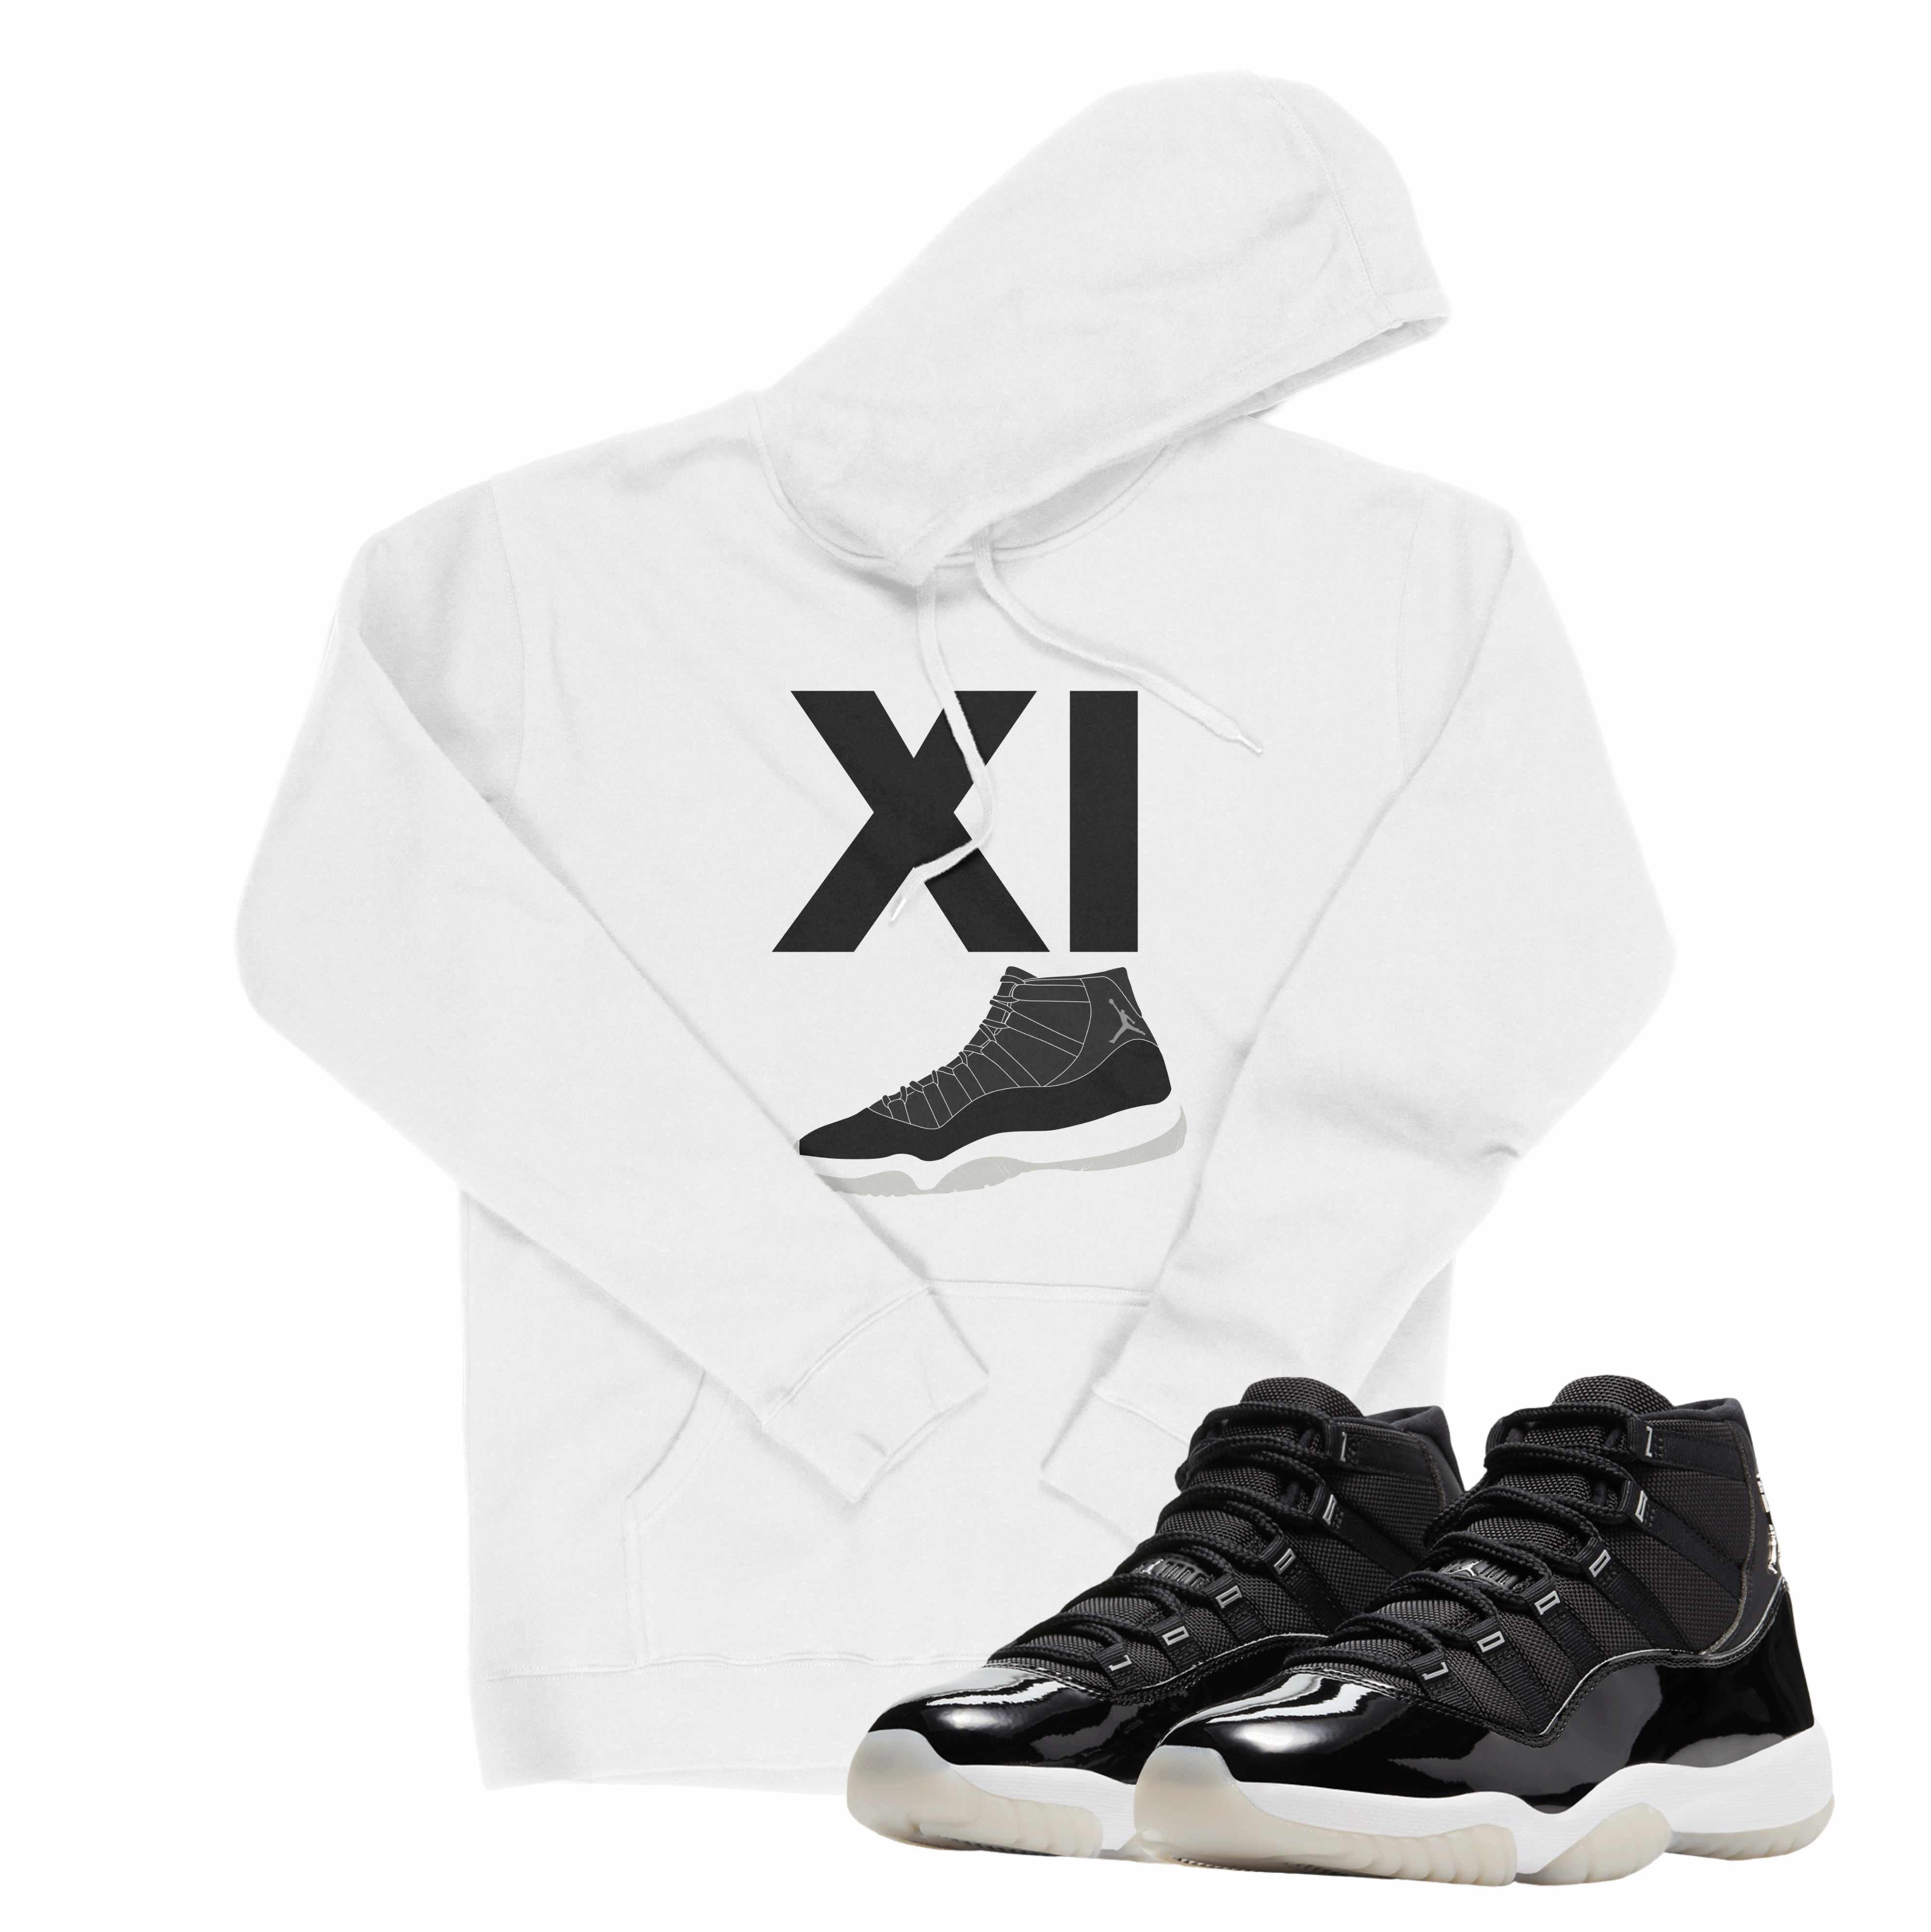 Air Jordan 11 Jubilee I Silhouette Hoodie | Air Jordan 11 | Sneaker Match | Jordan Matching Outfits